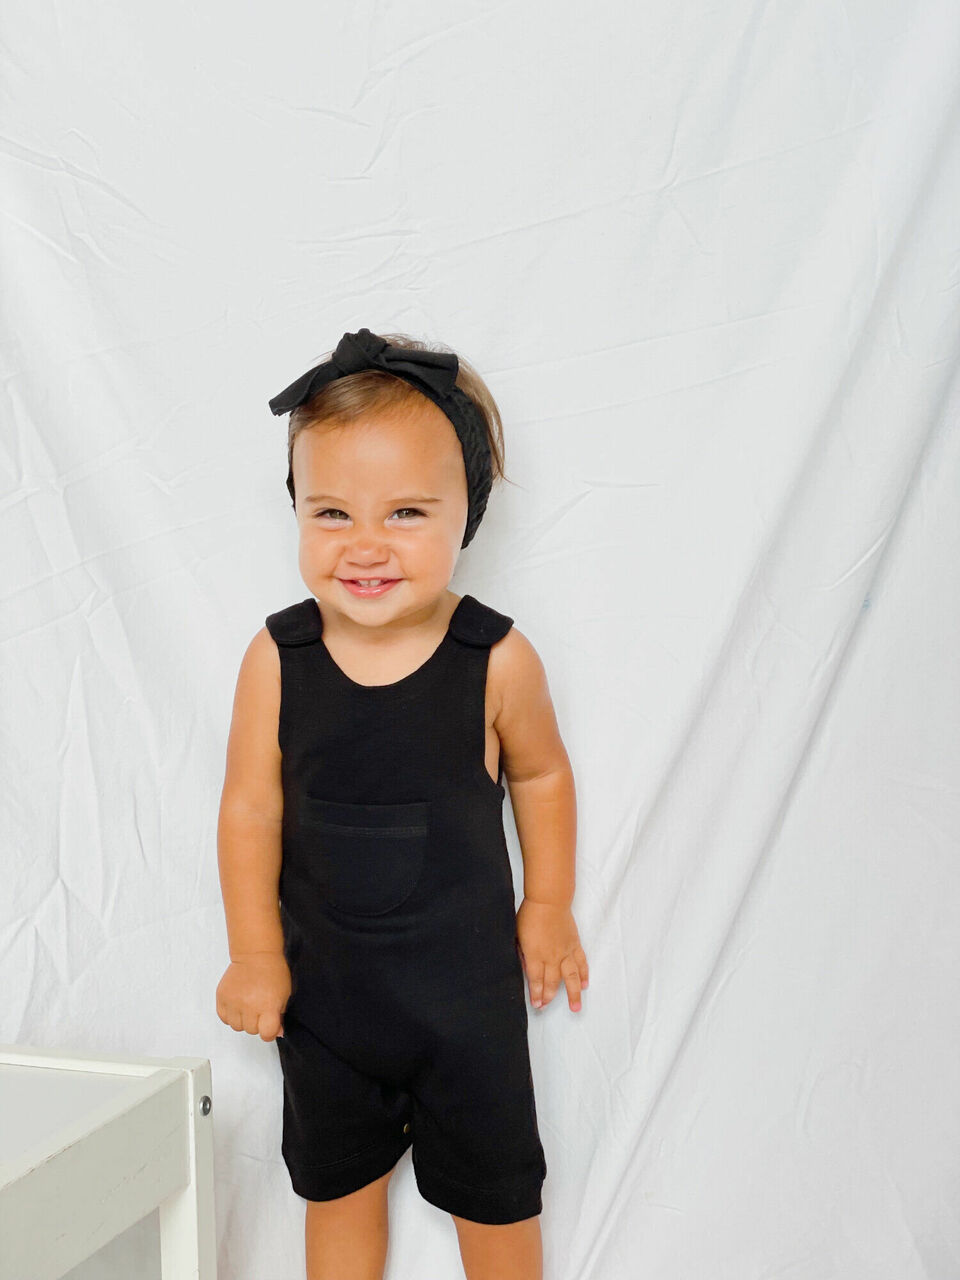 Child wearing Organic Kids' Sleeveless Romper in Black.